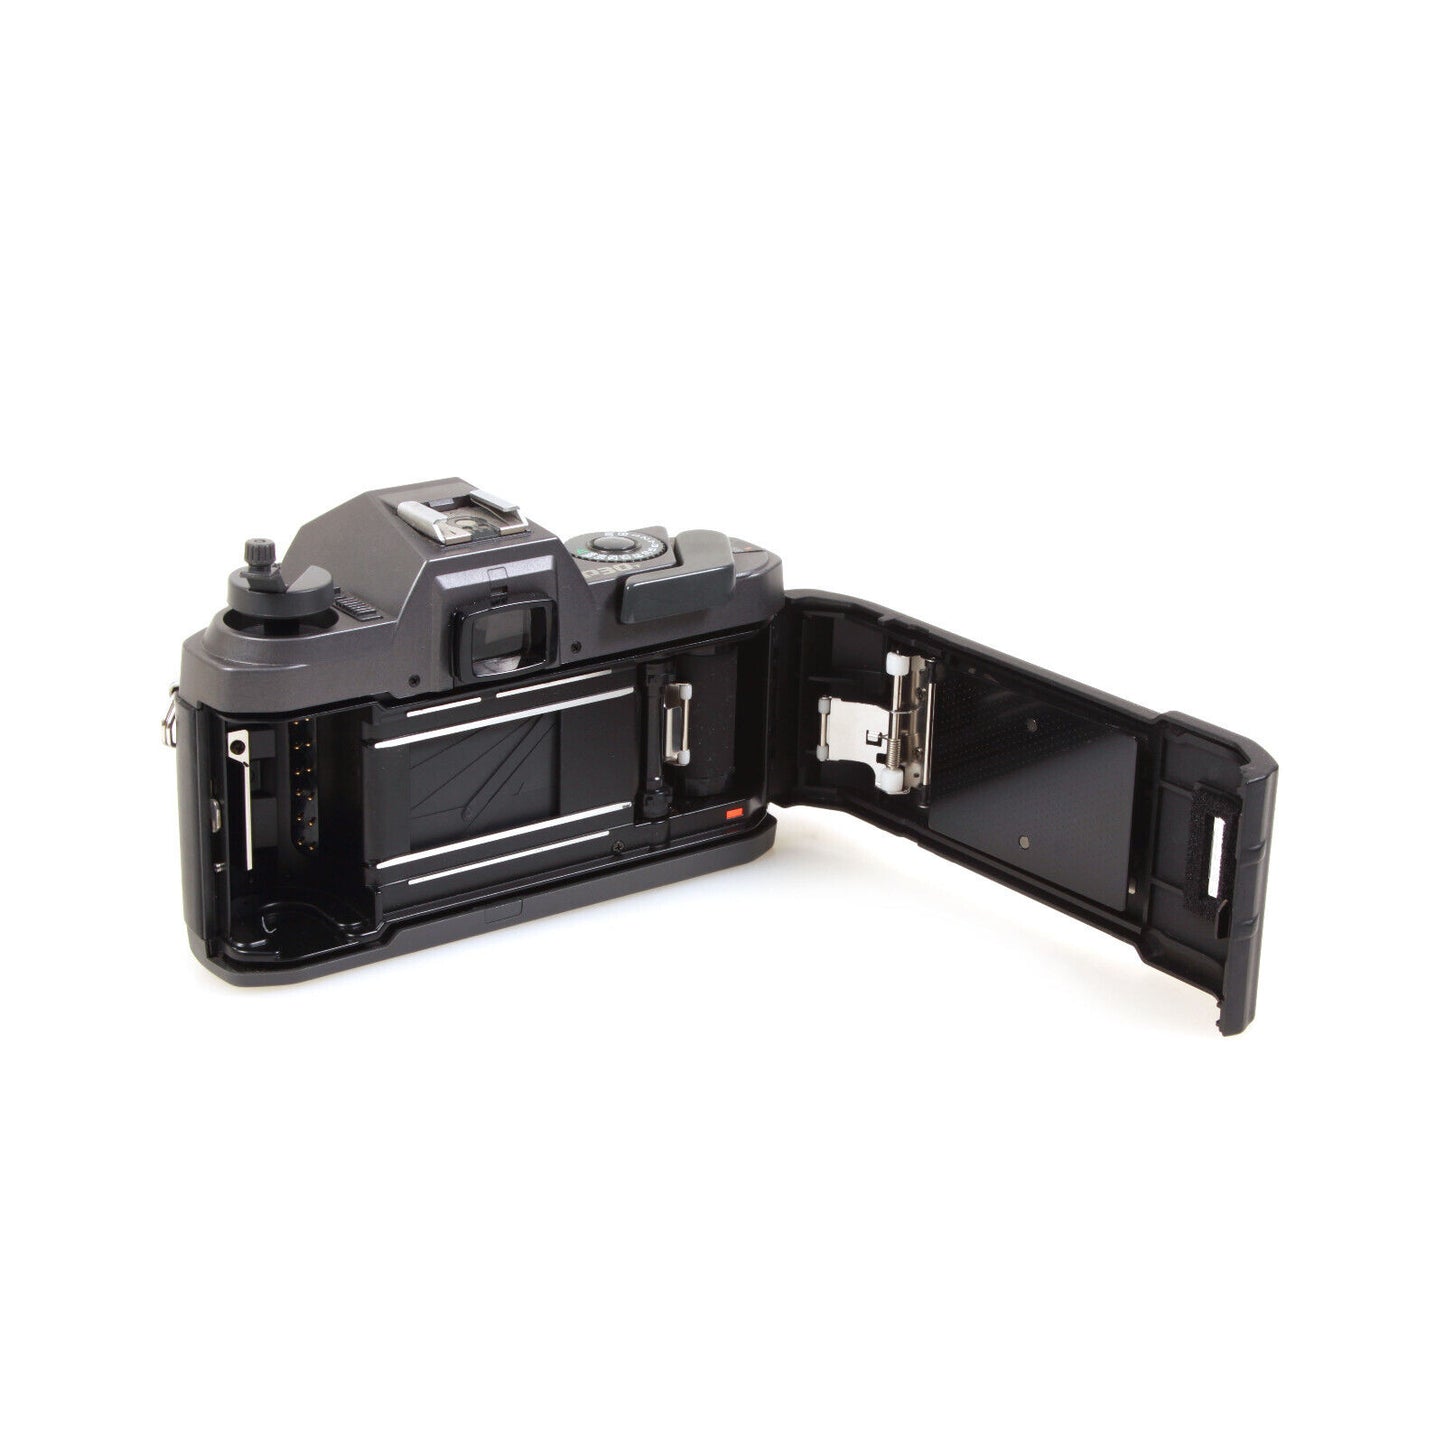 Pentax P30 35mm SLR Film Camera With 50mm F/2.8 Lens